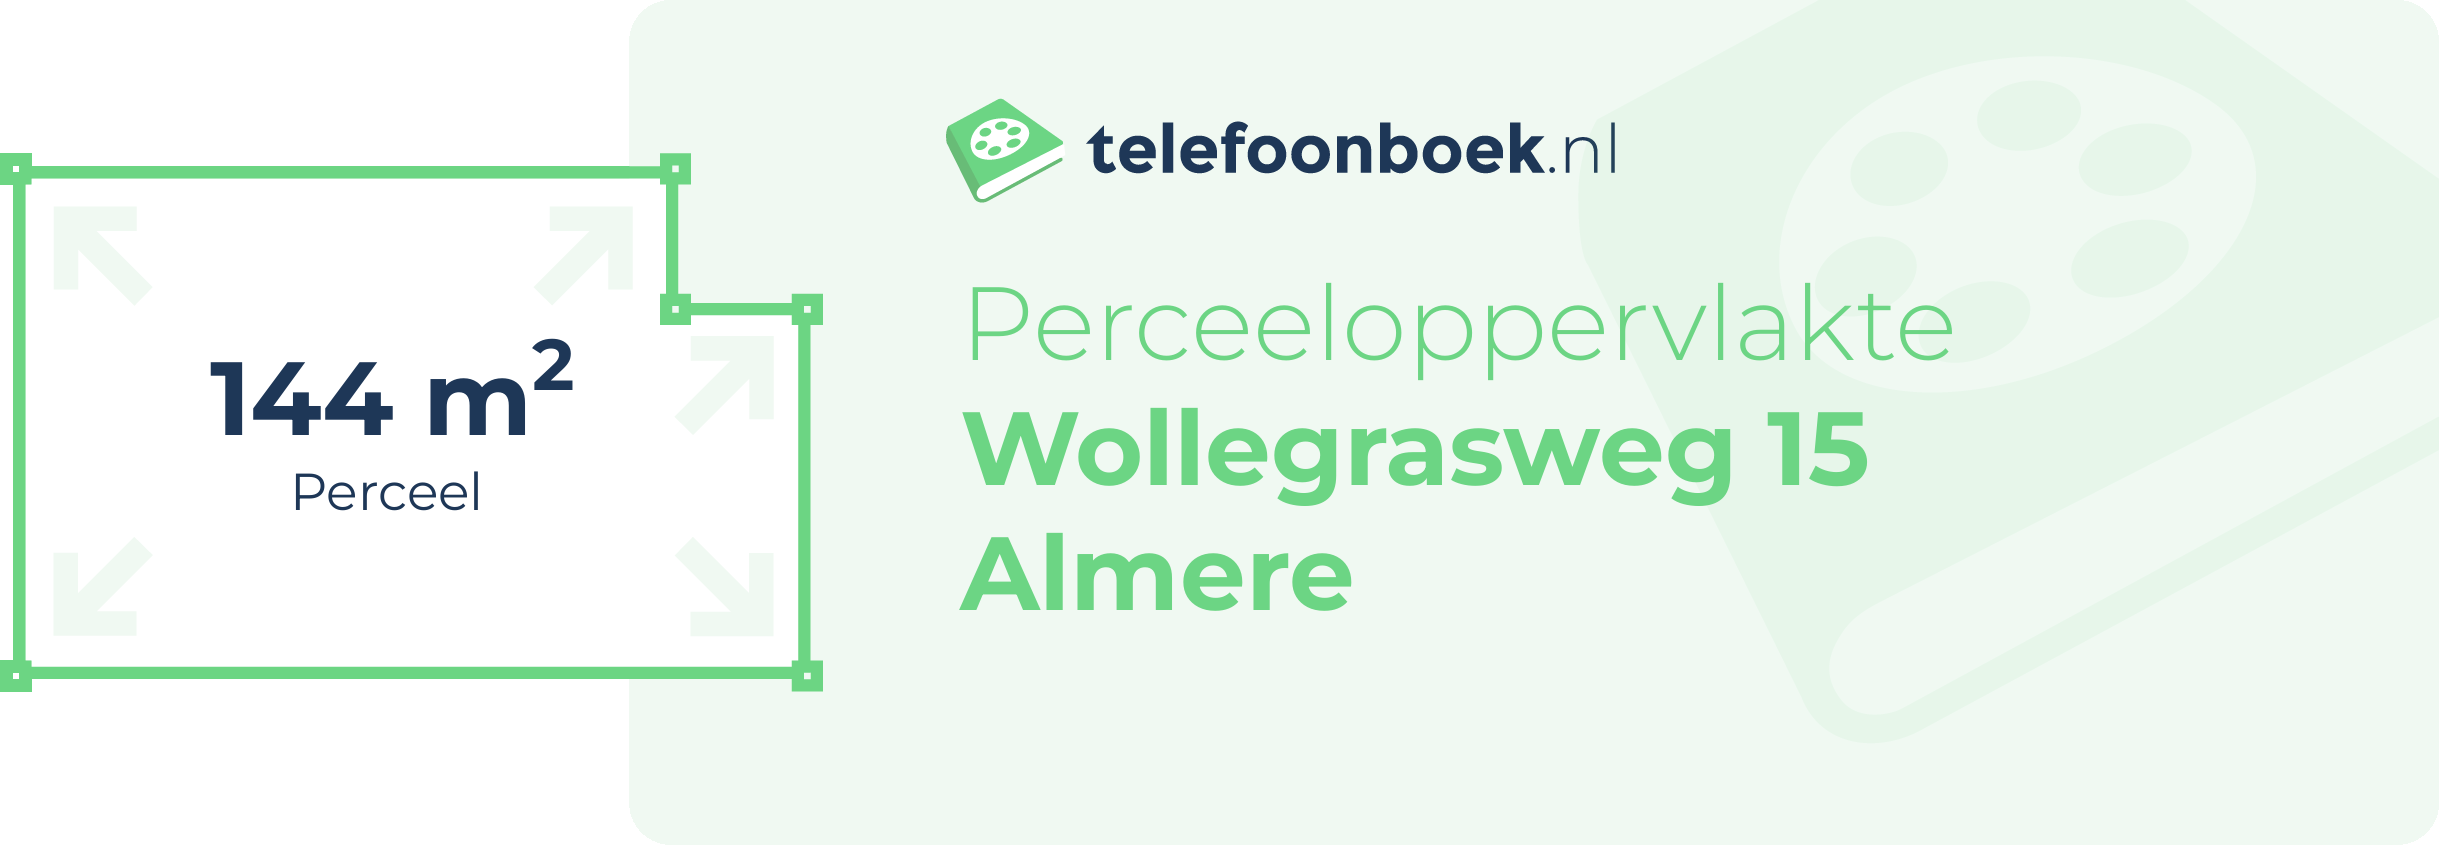 Perceeloppervlakte Wollegrasweg 15 Almere